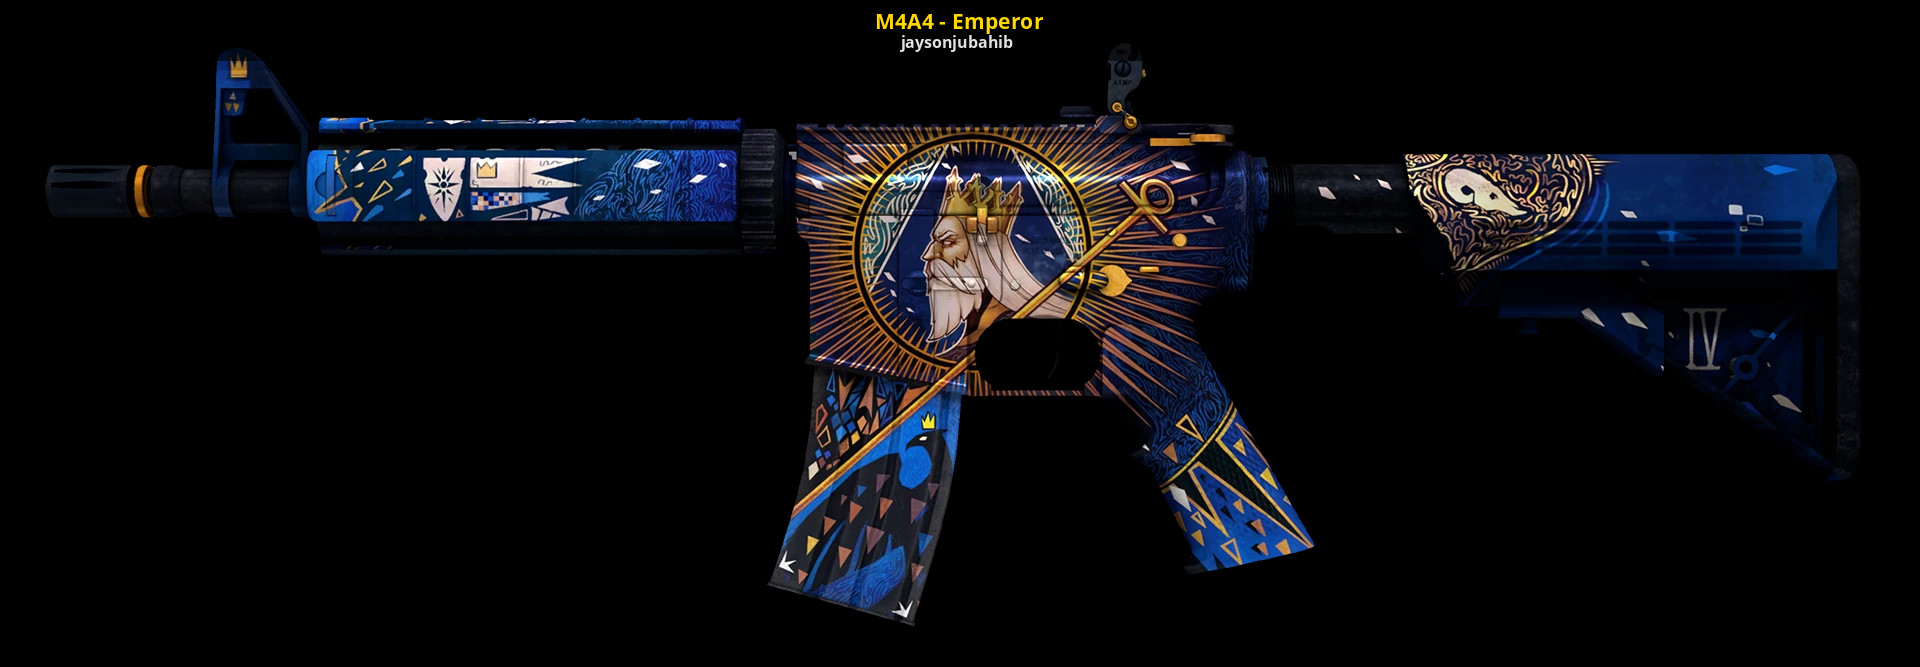 M4a4 император bs фото 5